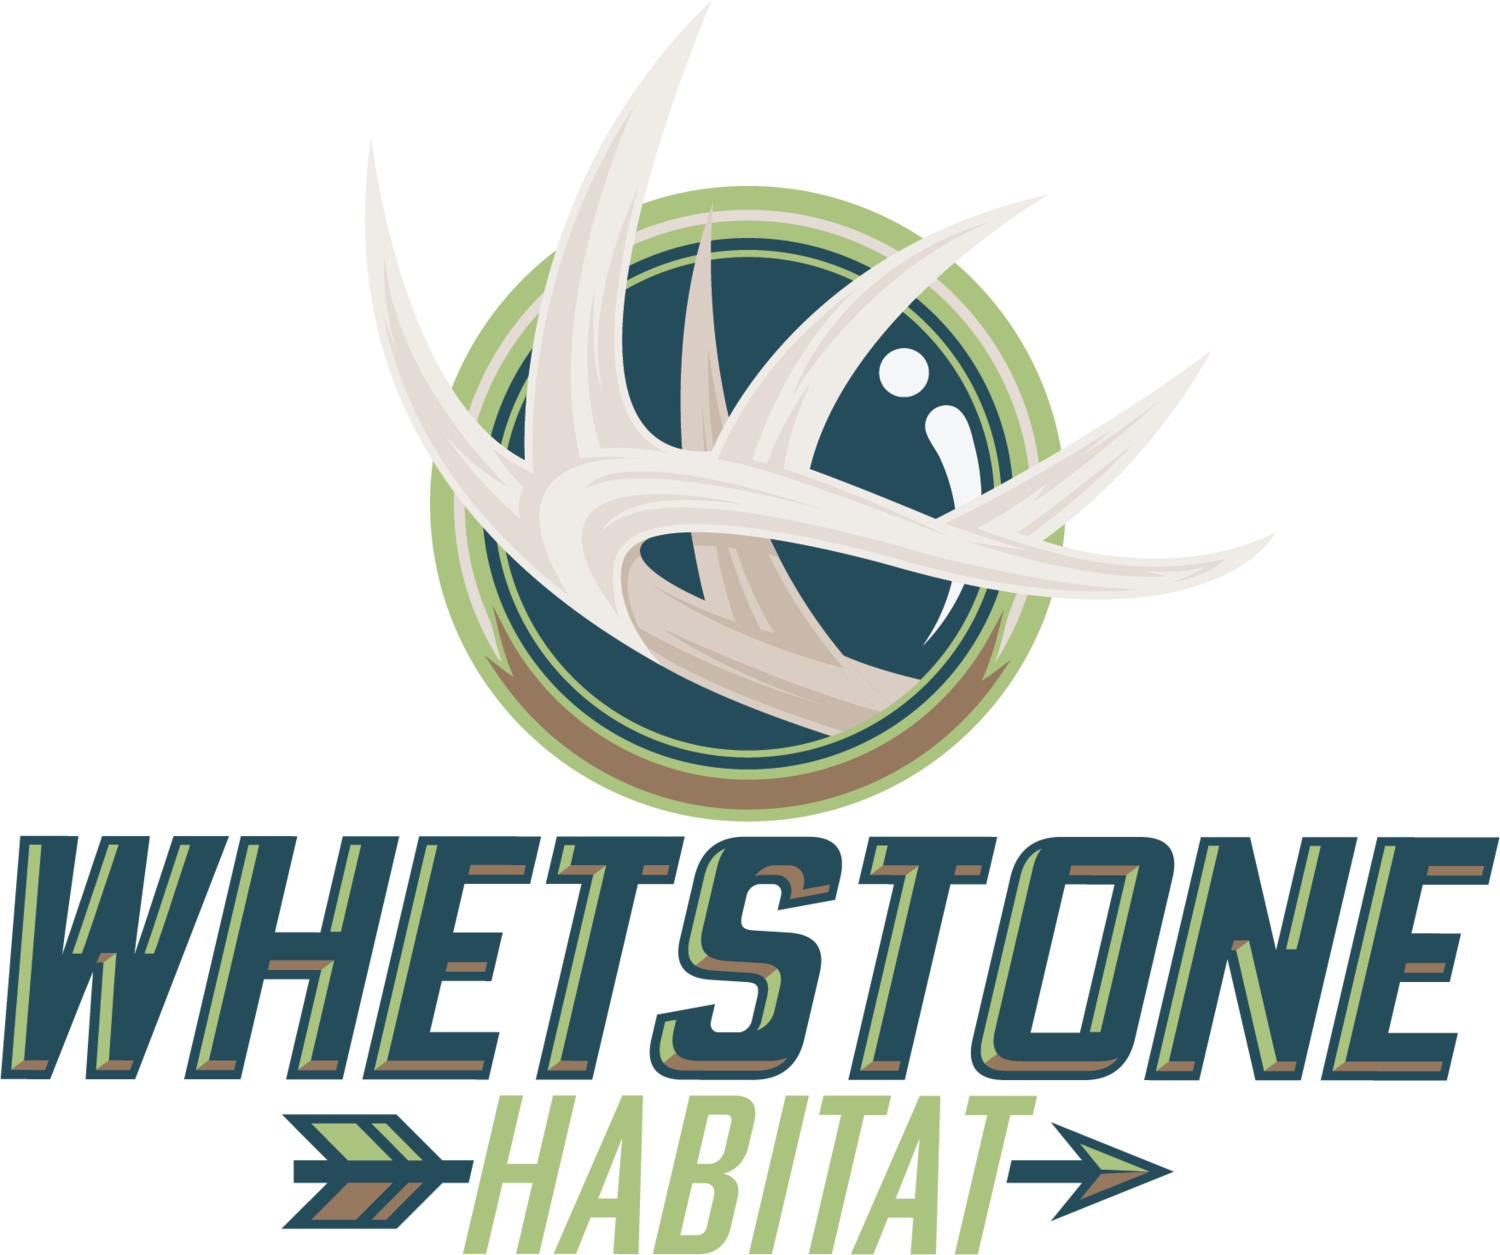 Whetstone Habitat LLC